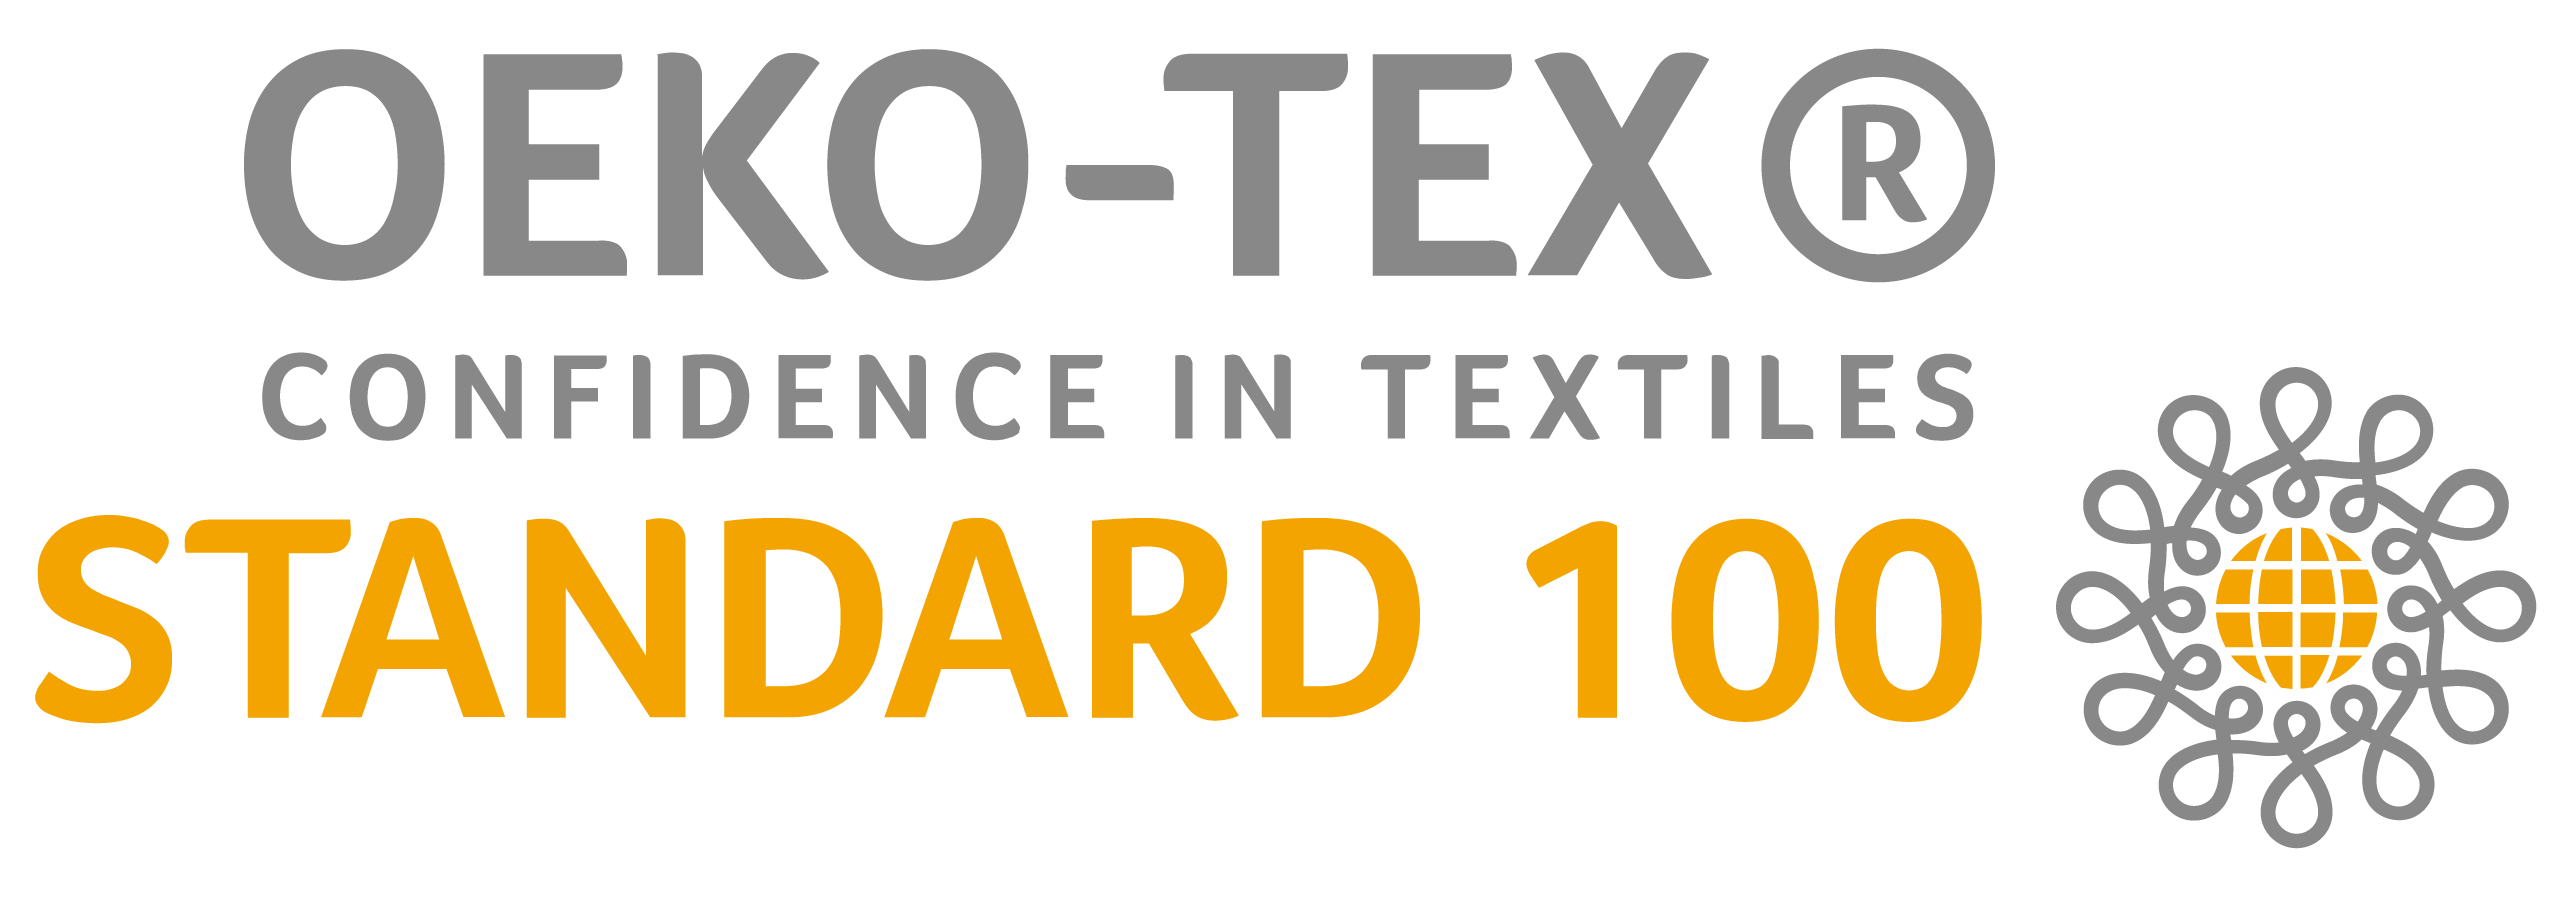 standard-100-by-oeko-tex-logo-vector-01